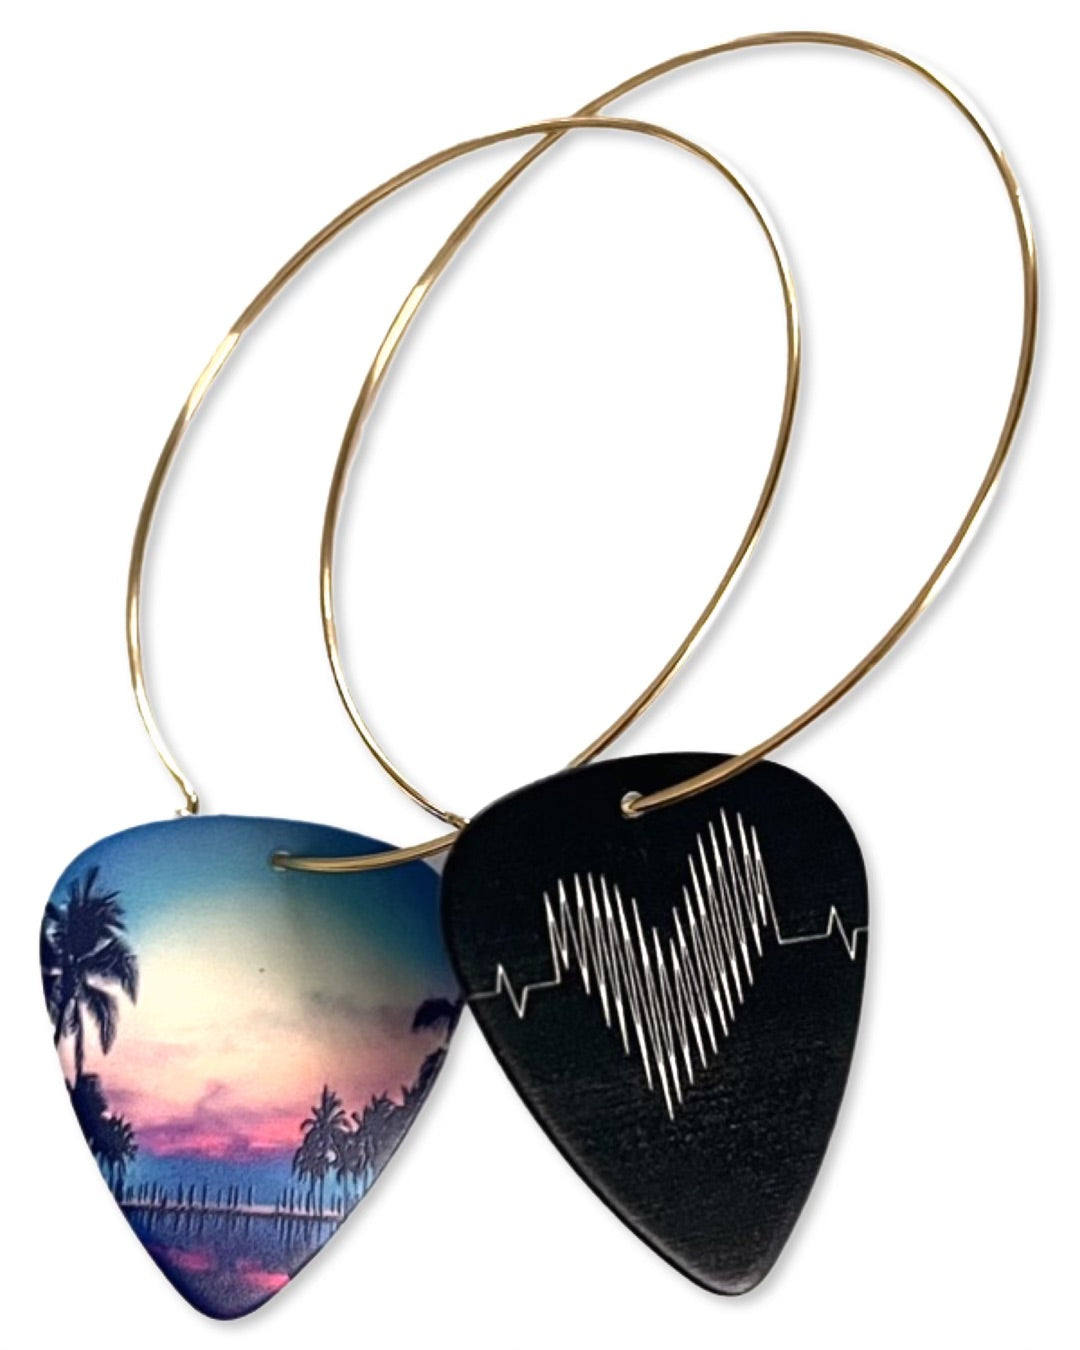 Sunset Blue Beach Reversible Single Guitar Pick Earrings